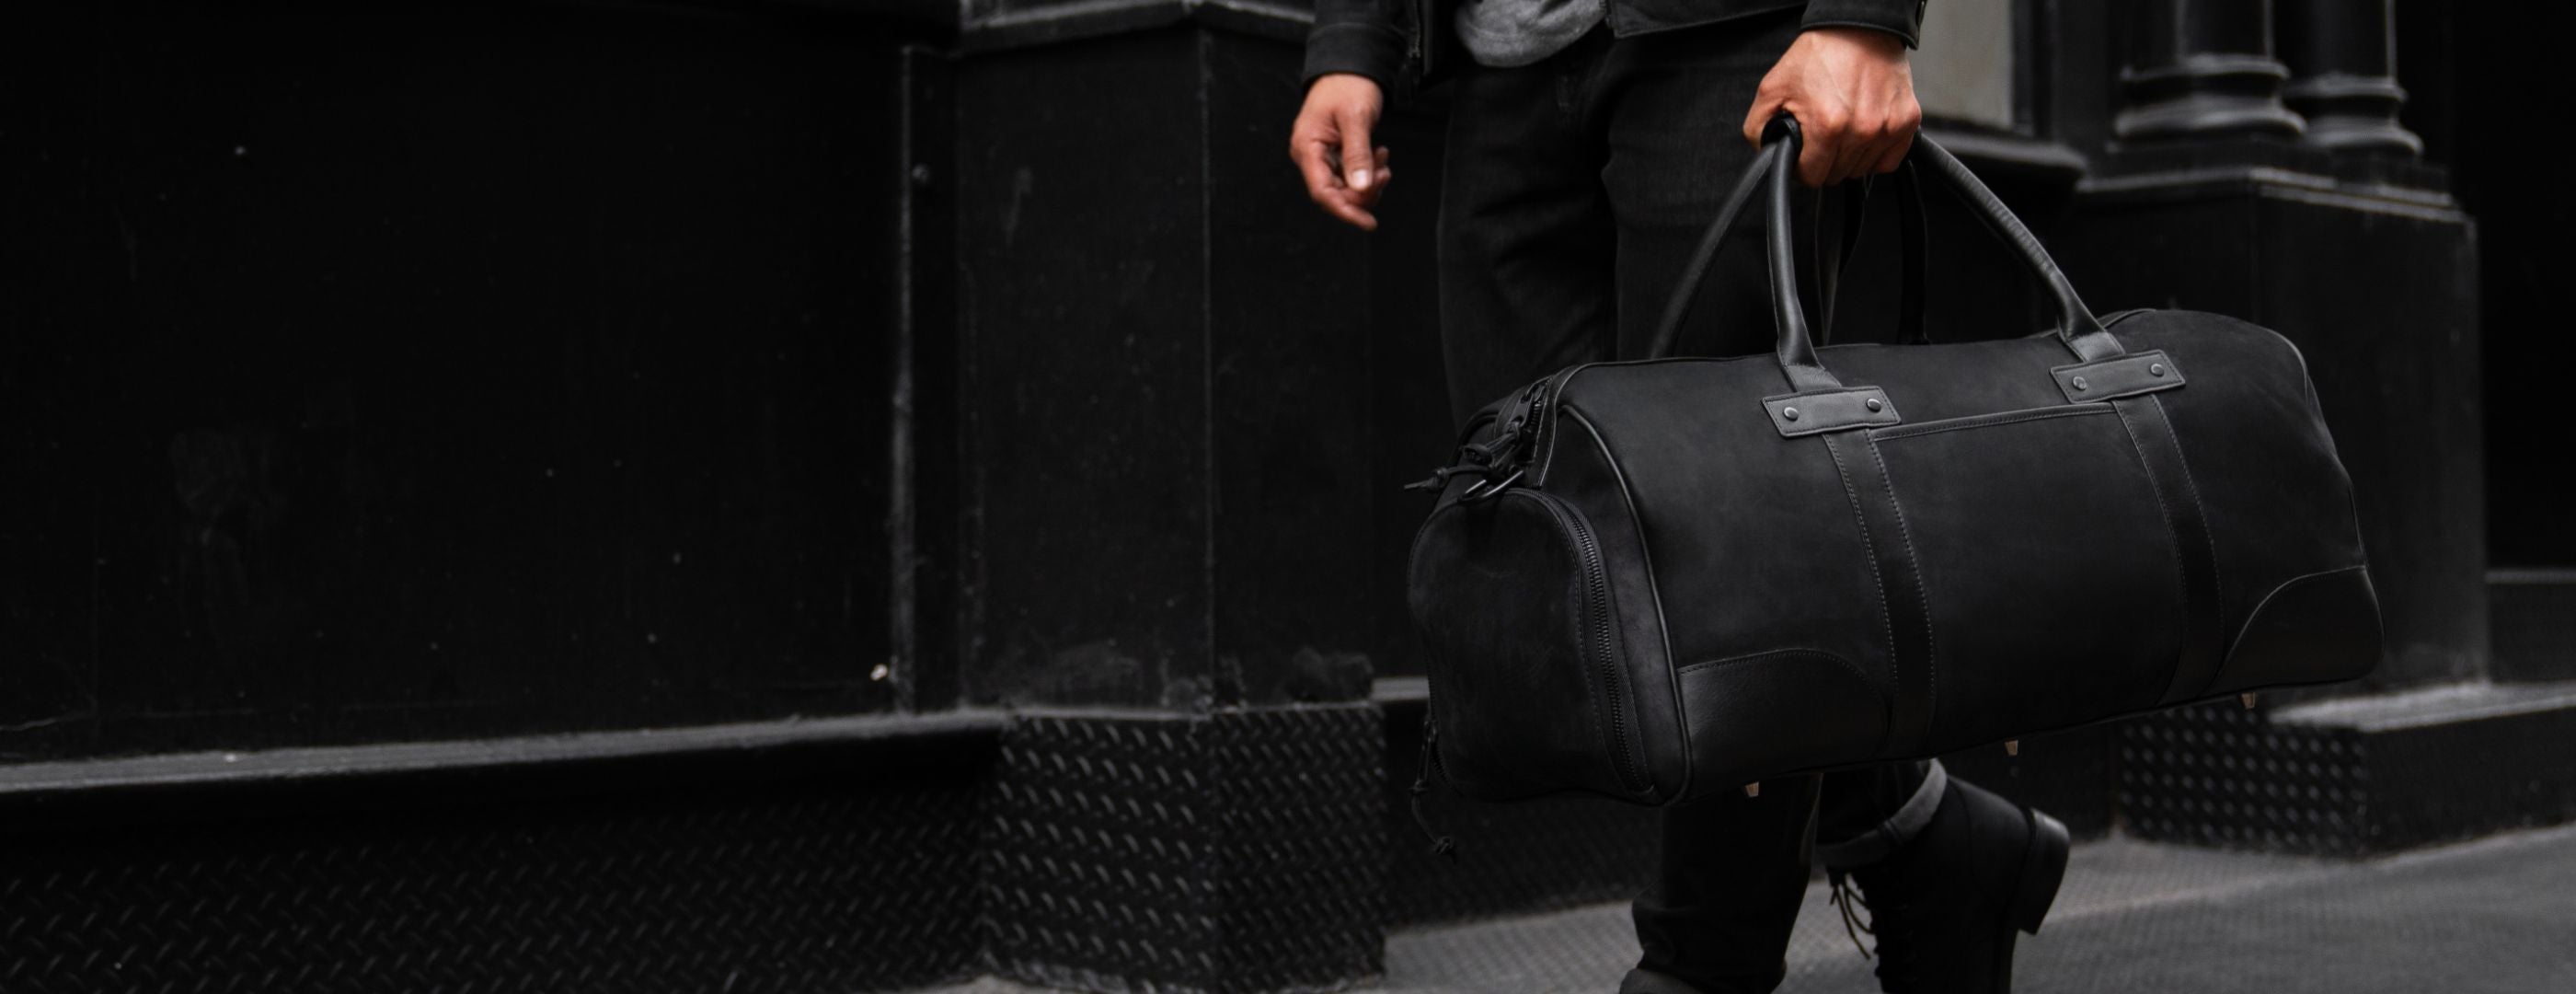 Men's Weekender Duffel Bag in Black Matte Leather - Thursday